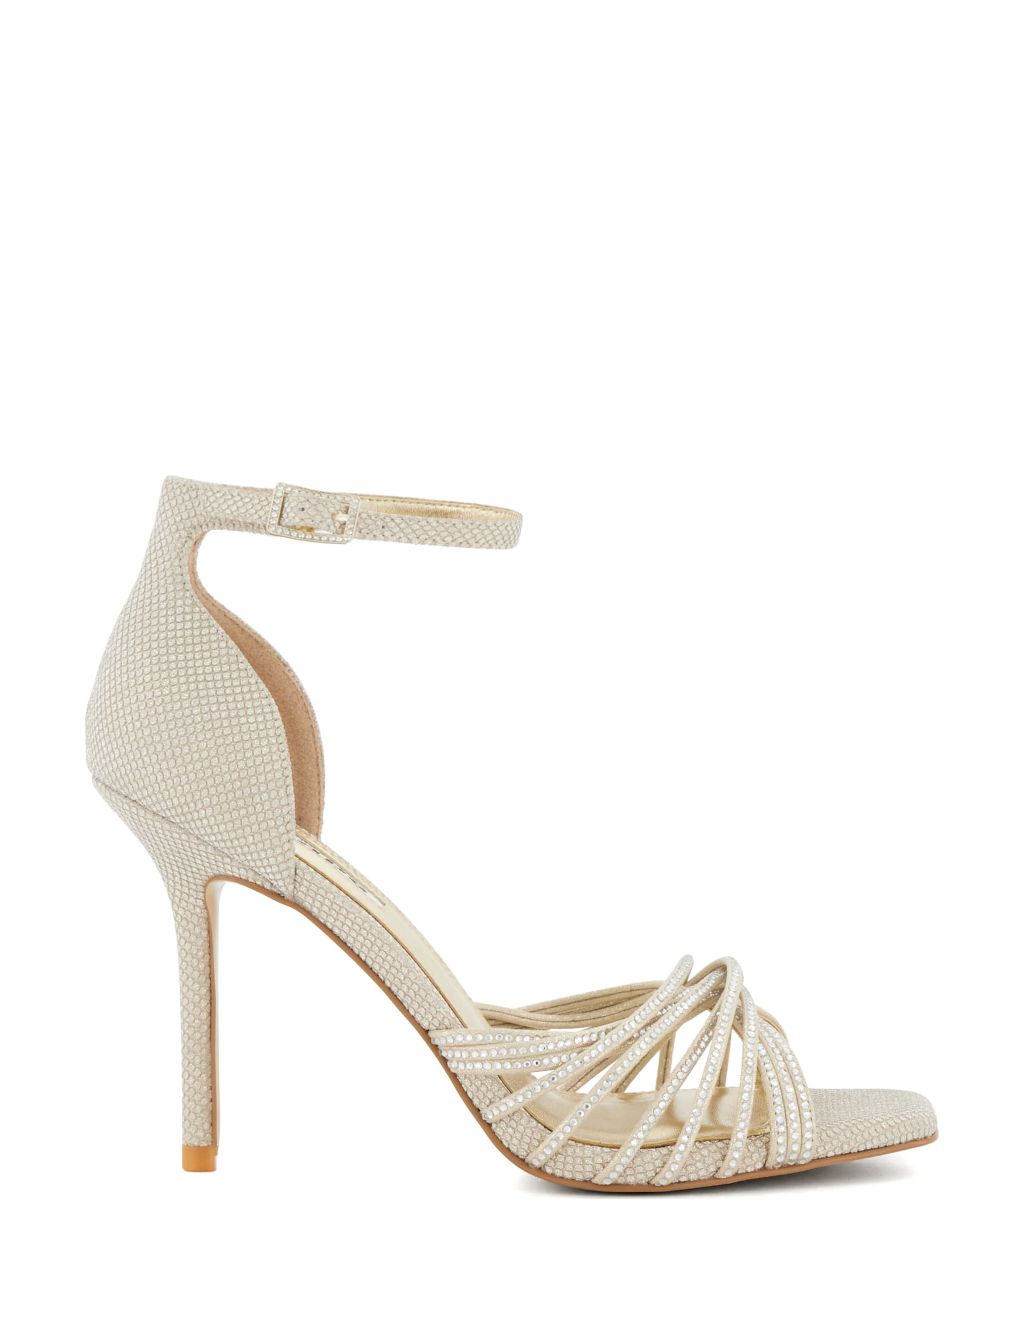 Sparkle Ankle Strap Stiletto Heel Sandals | Dune London | M&S